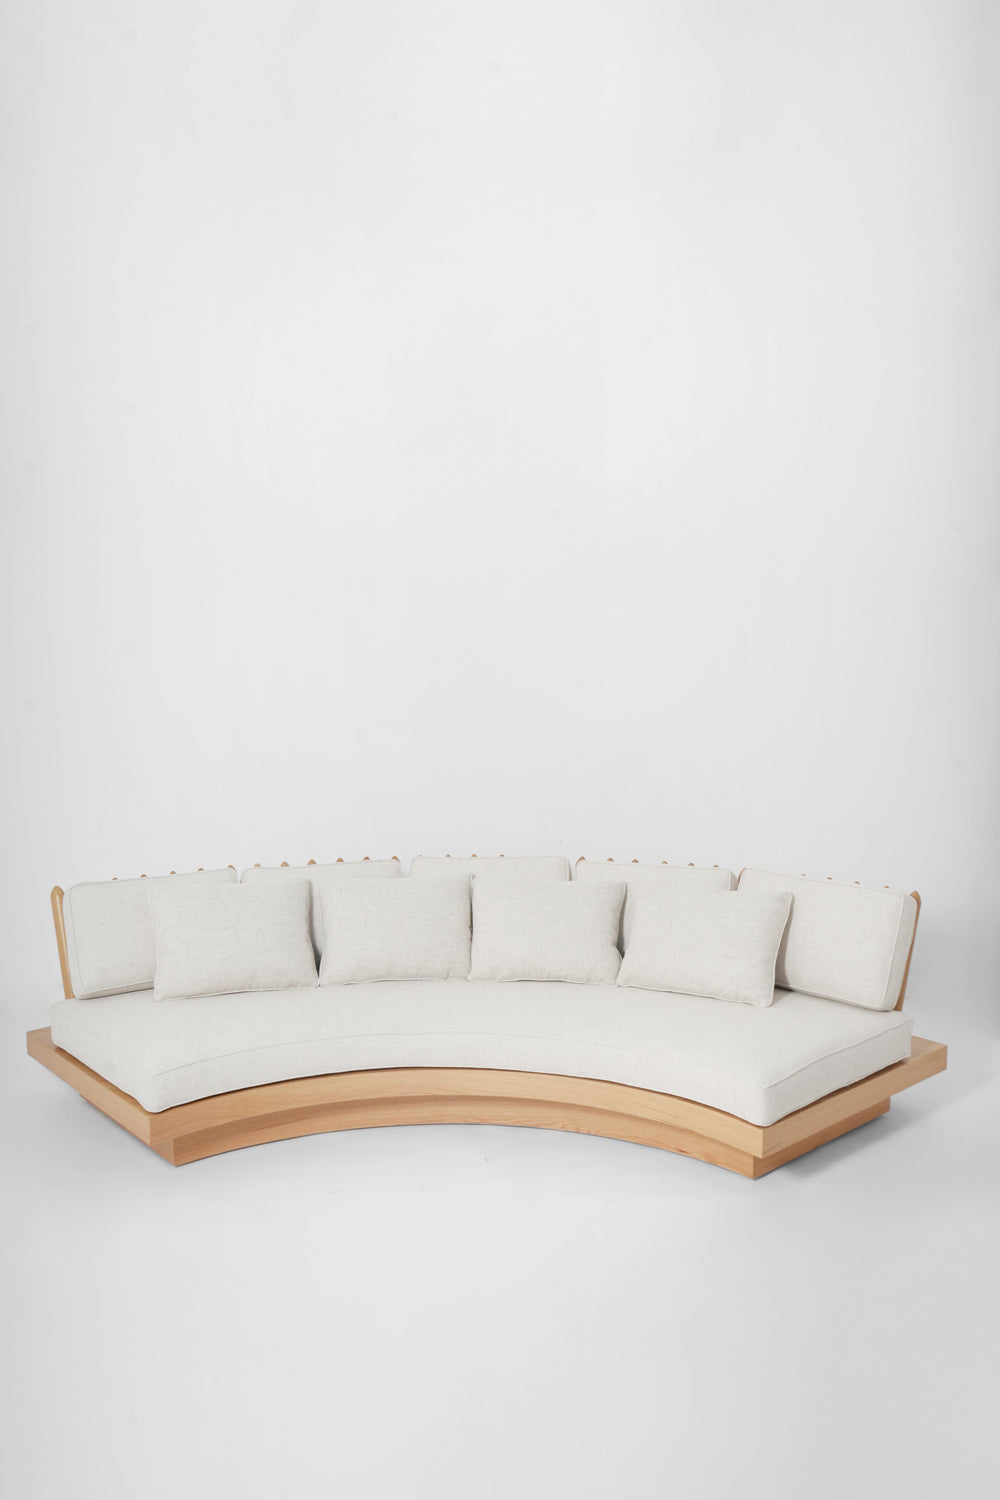 San Romano round oak sofa, Barracuda Edition.